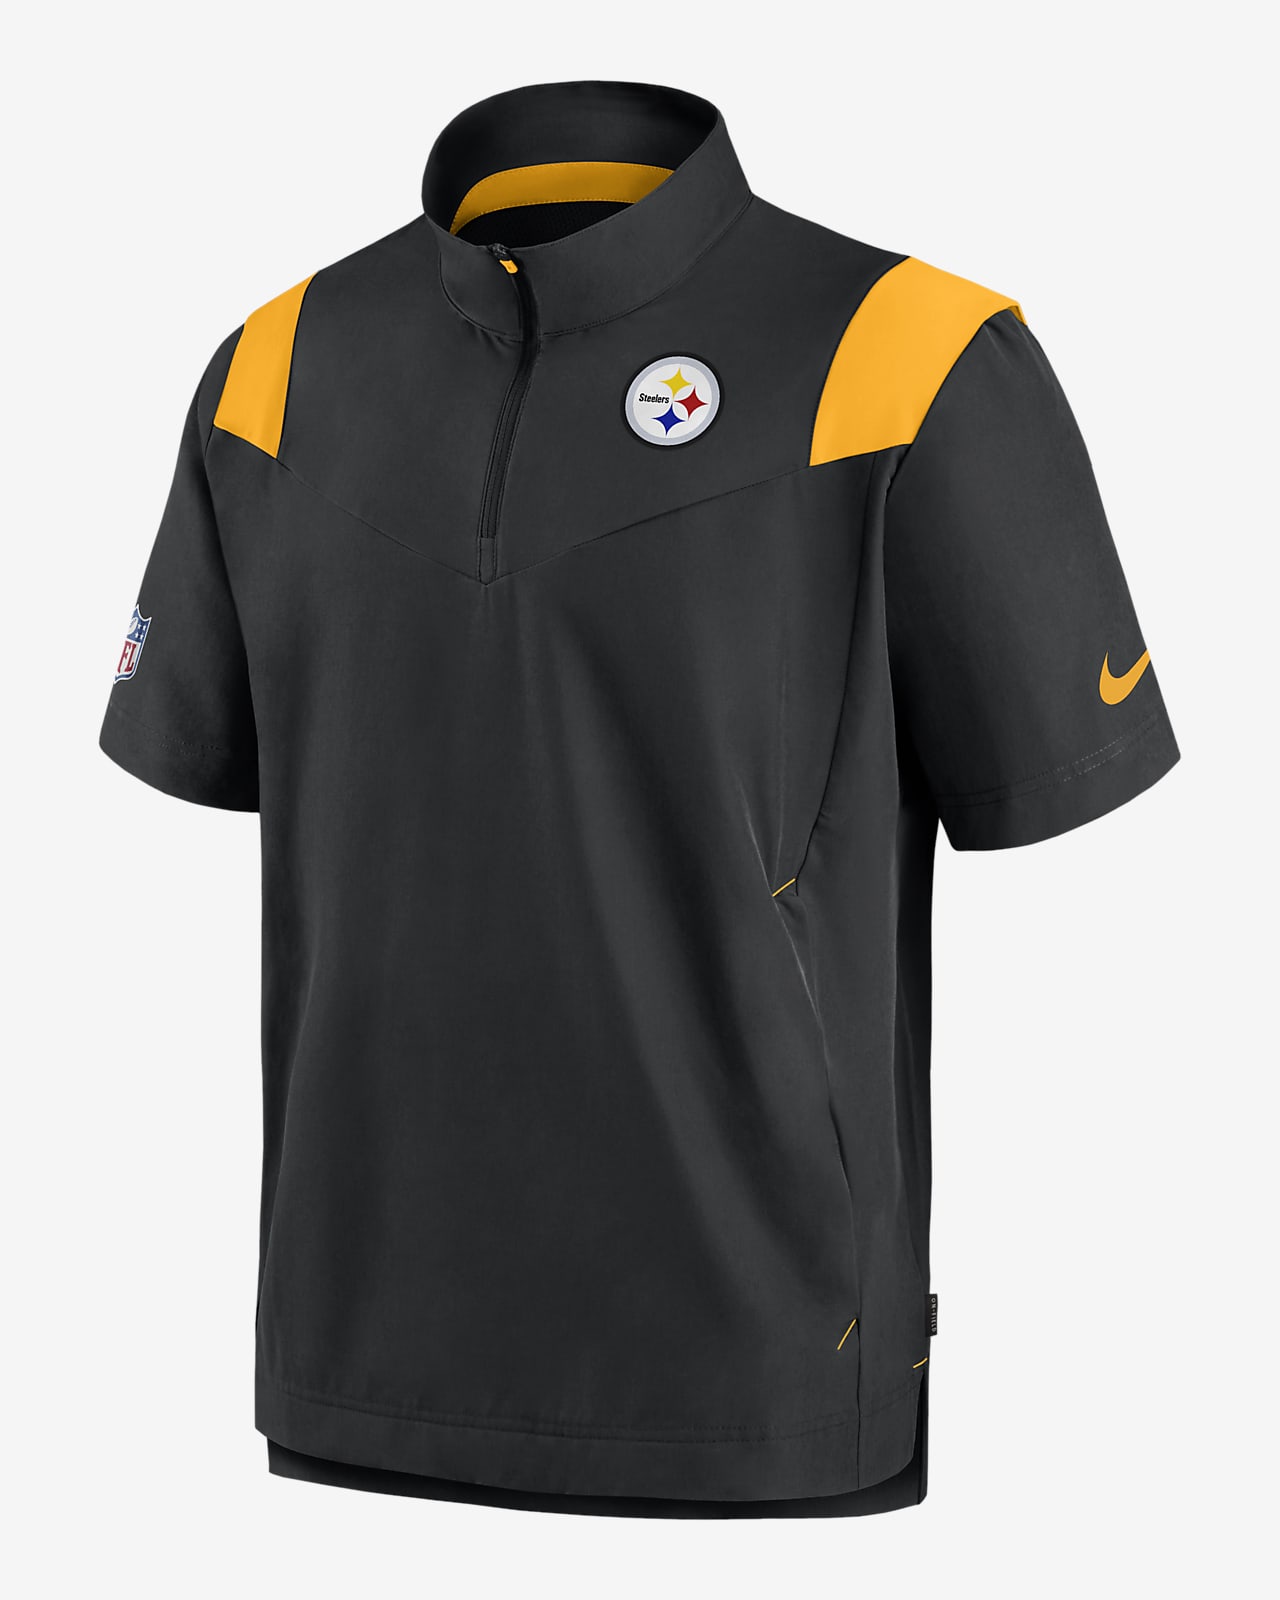 Nike Sideline Coach Lockup (NFL Steelers) Men's Short-Sleeve Jacket.